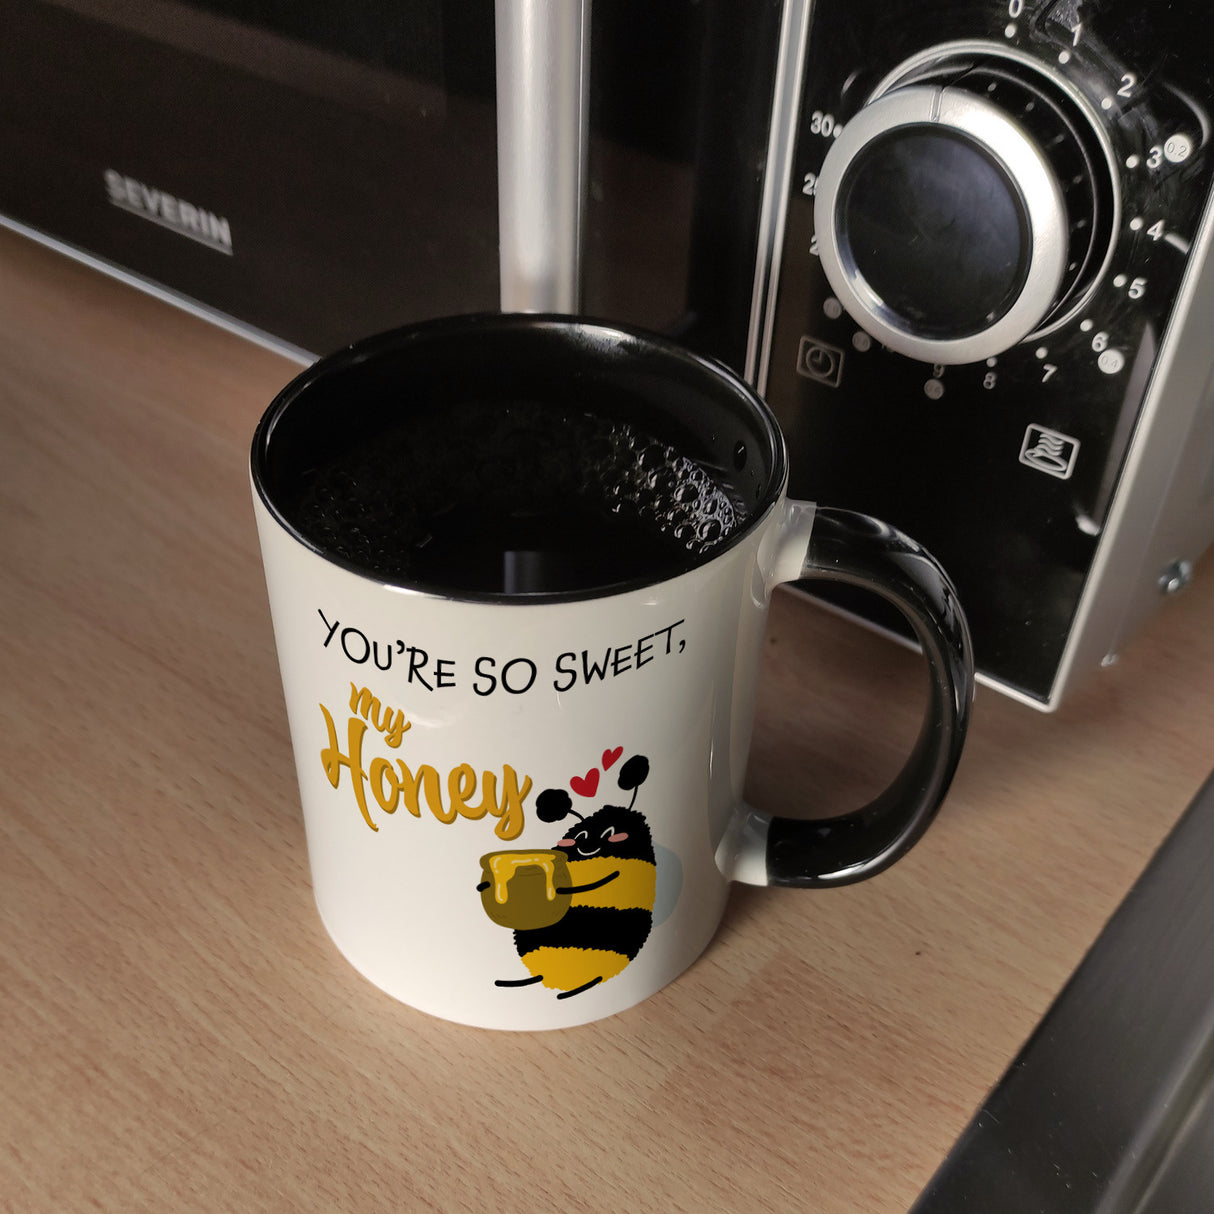 You're so sweet, my honey Kaffeebecher mit süßer Biene